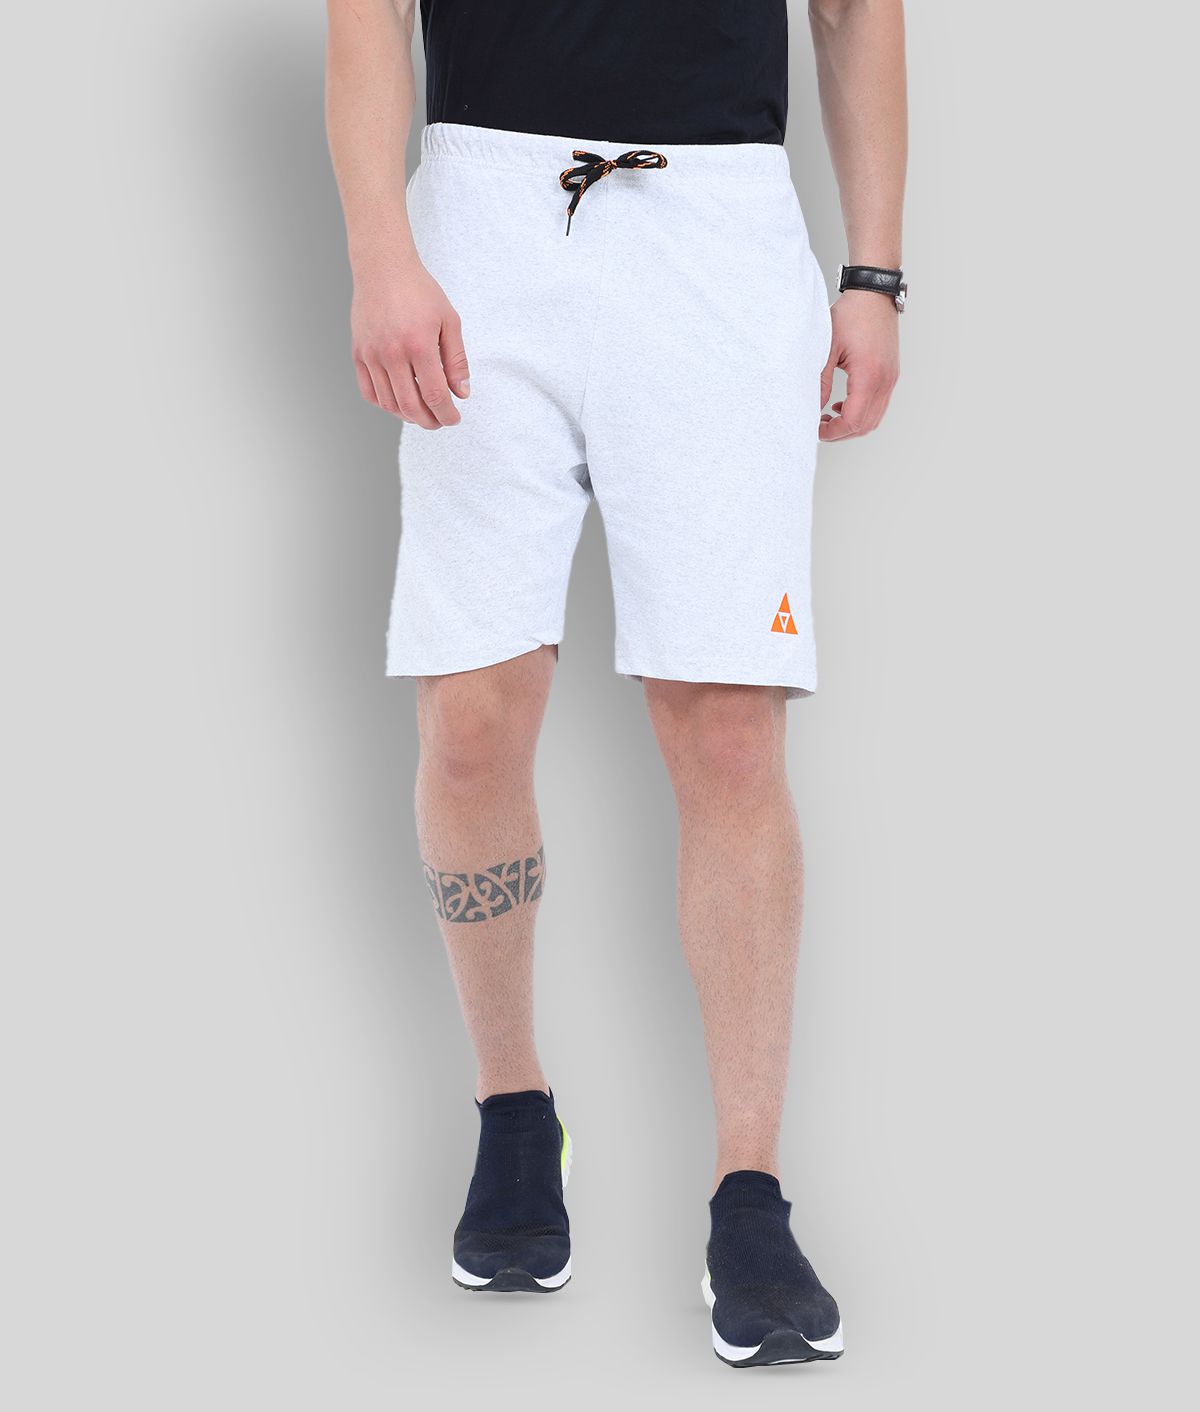     			Ardeur - White Cotton Blend Men's Shorts ( Pack of 1 )